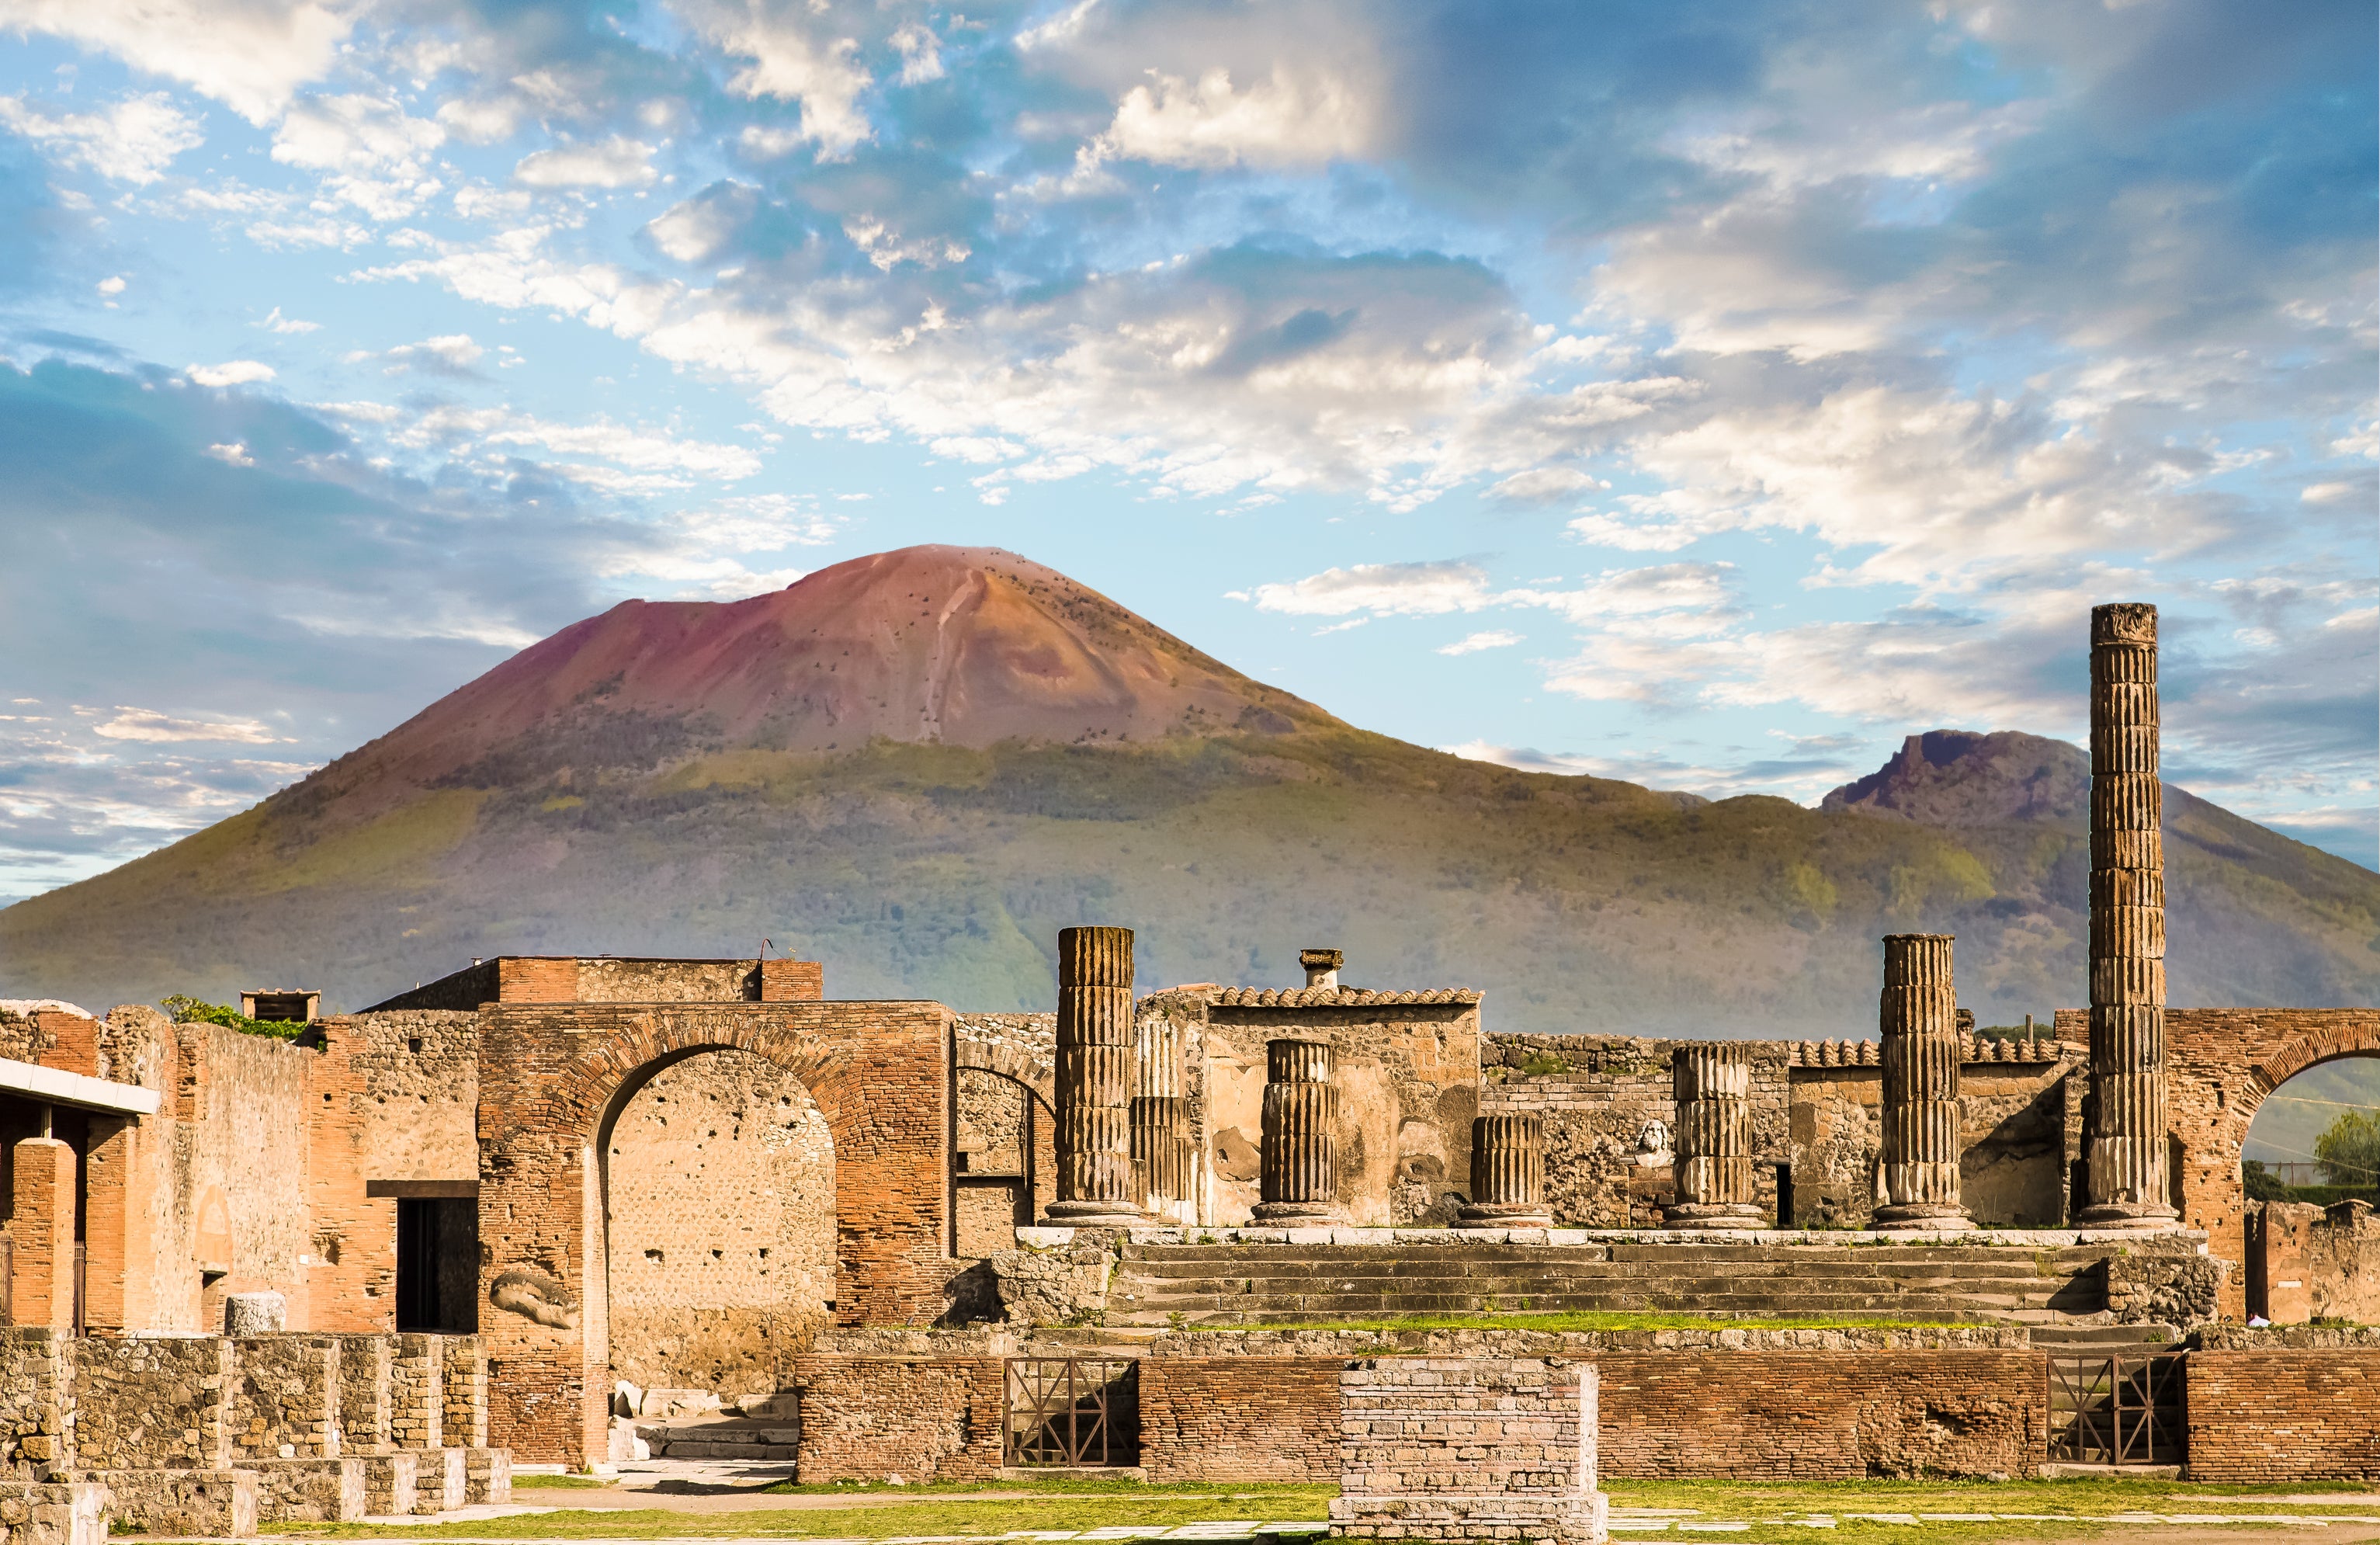 Mount Vesuvius overlooks the Pompeii site